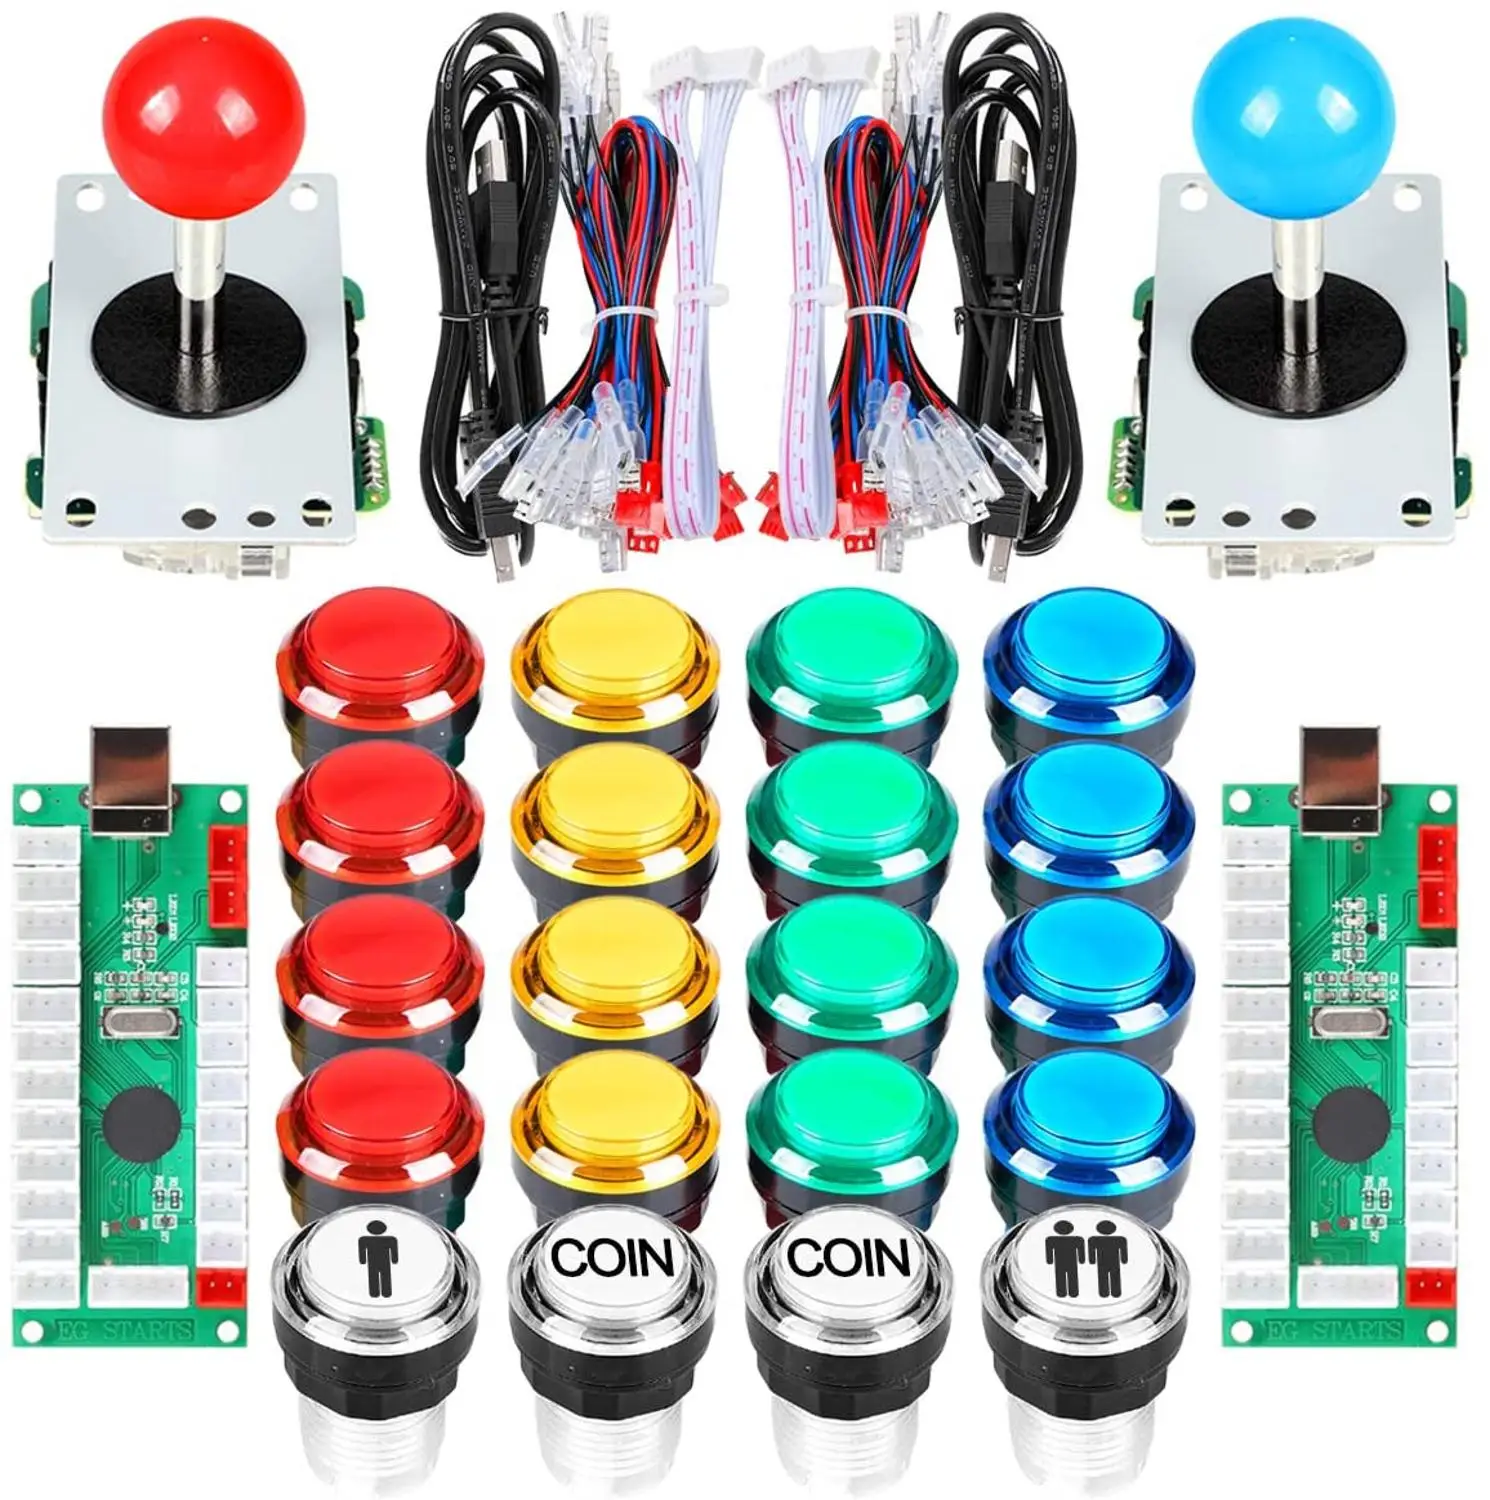 

2 Player Arcade DIY Kit USB Encoder to PC Joystick Games 5V LED Lit Push Buttons For Raspberry Pi 1 2 3 3B Mame Fighting Stick